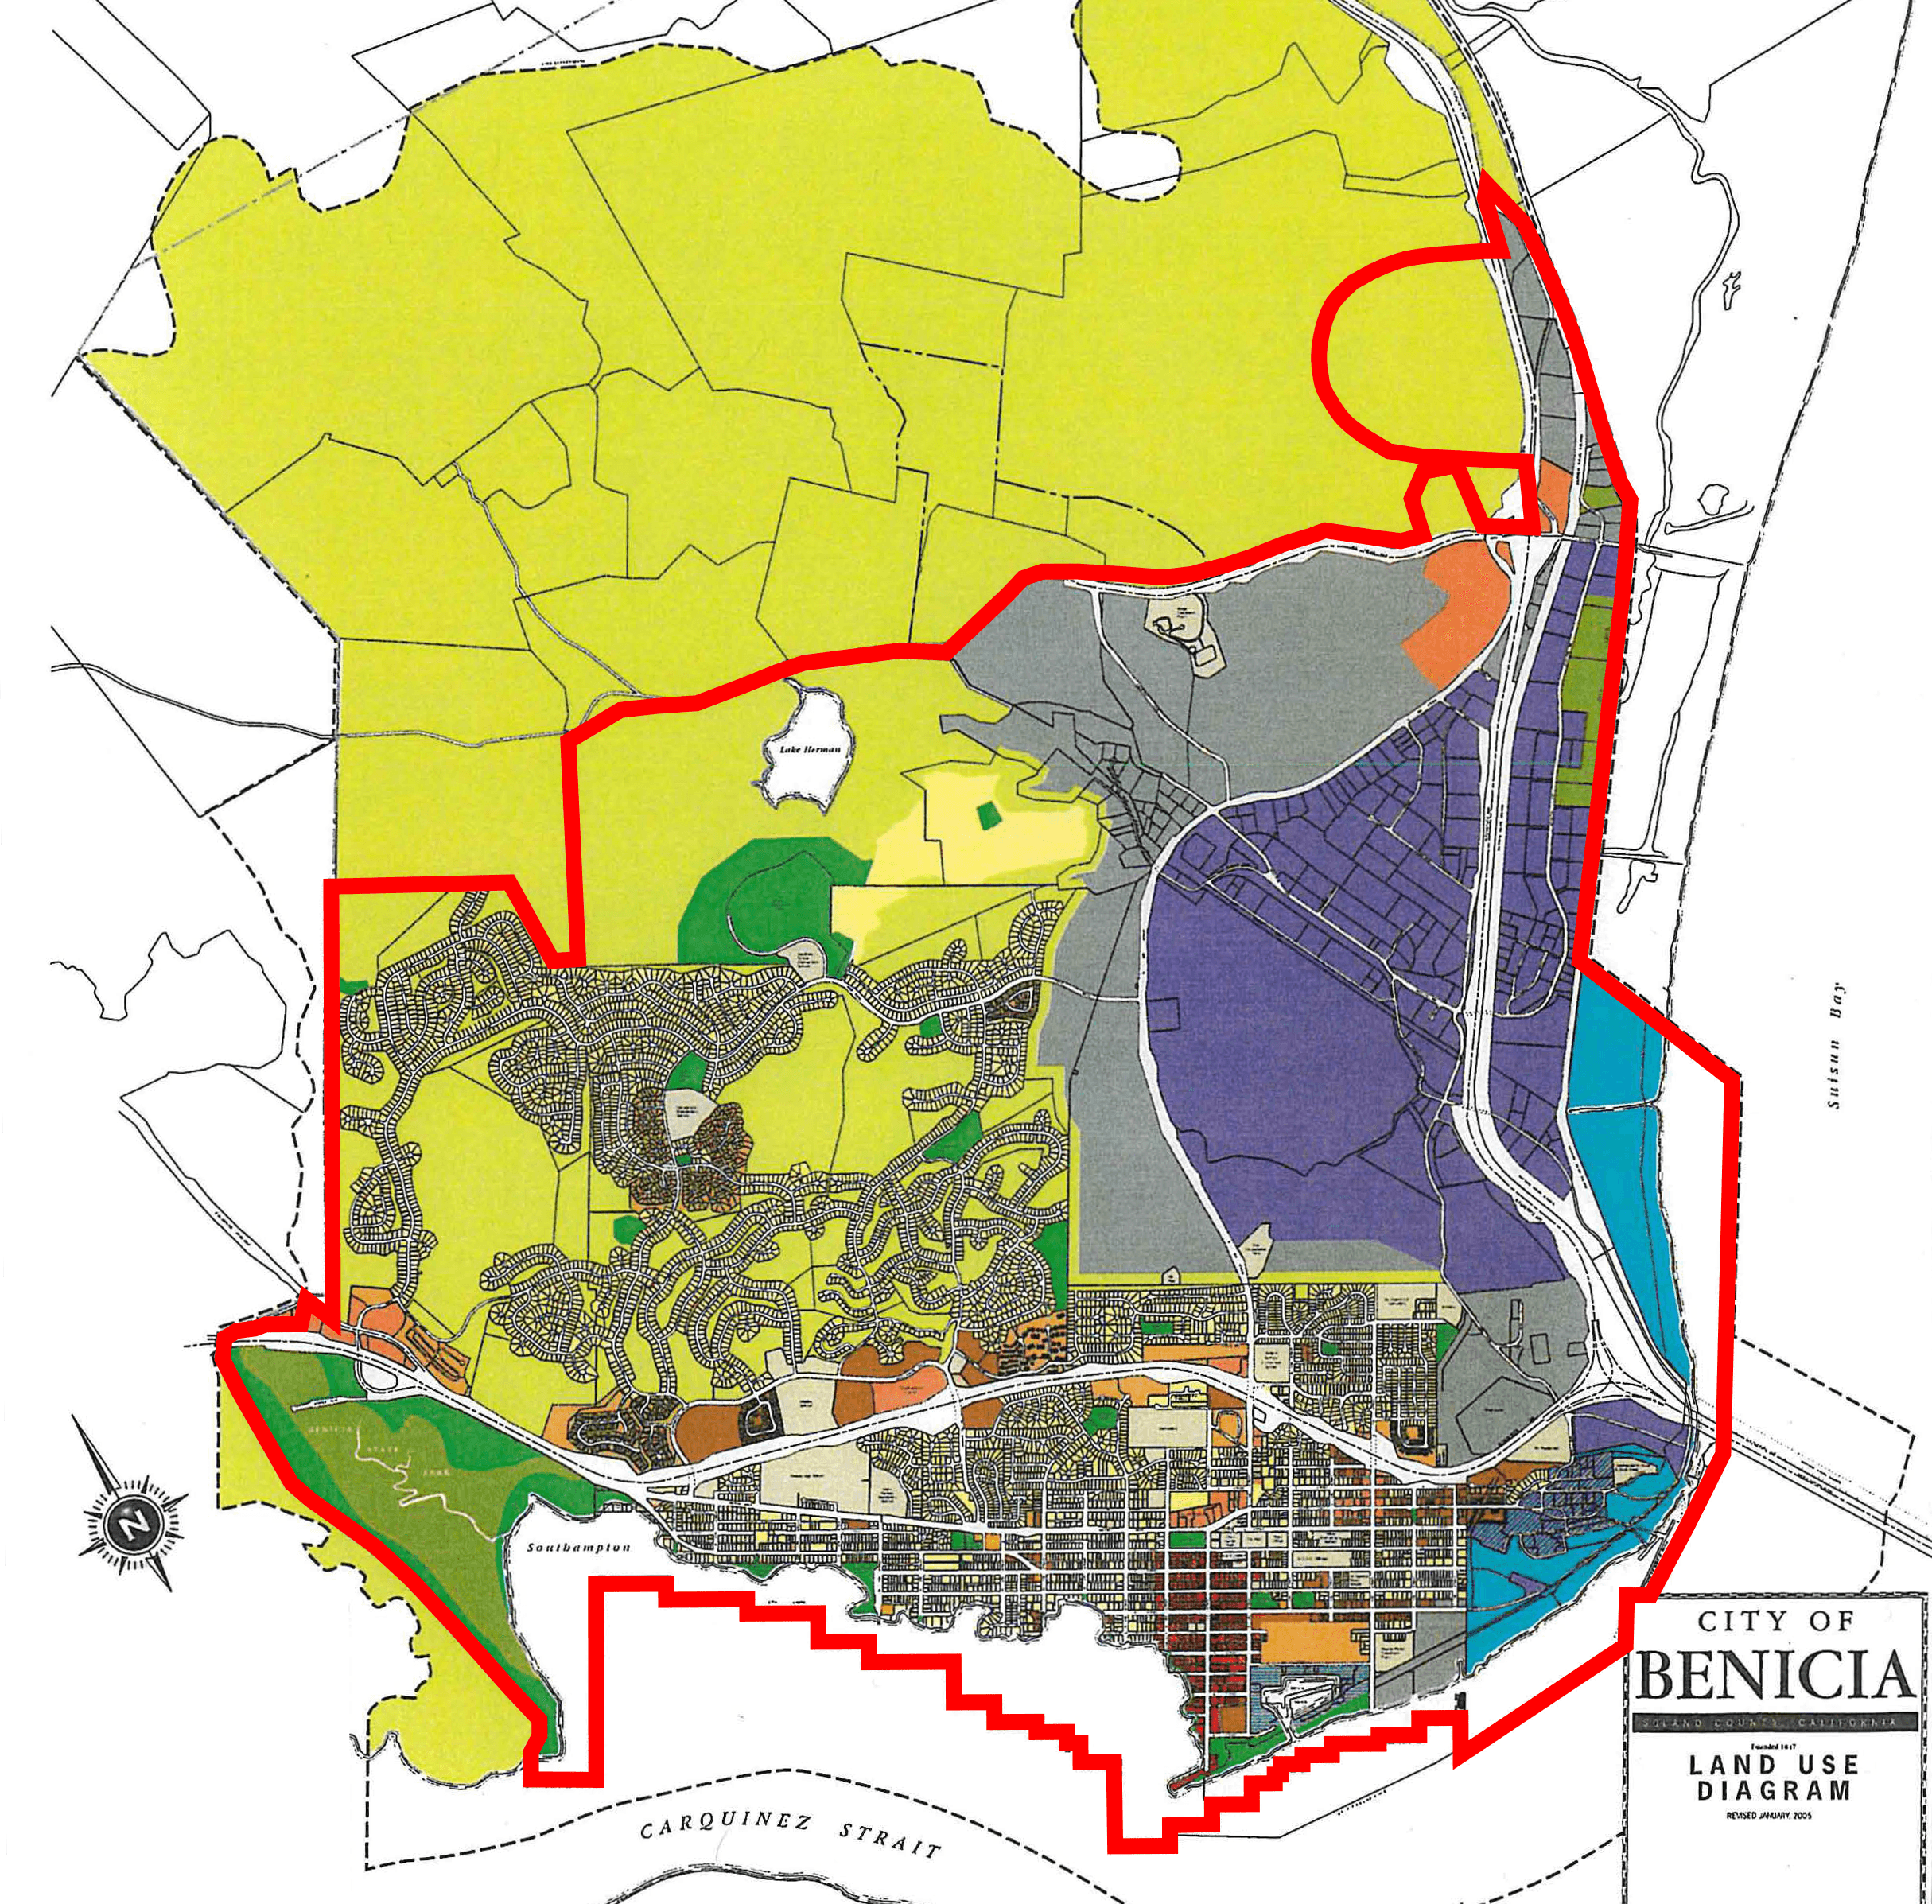 The city of Benicia's Urban Growth Boundary